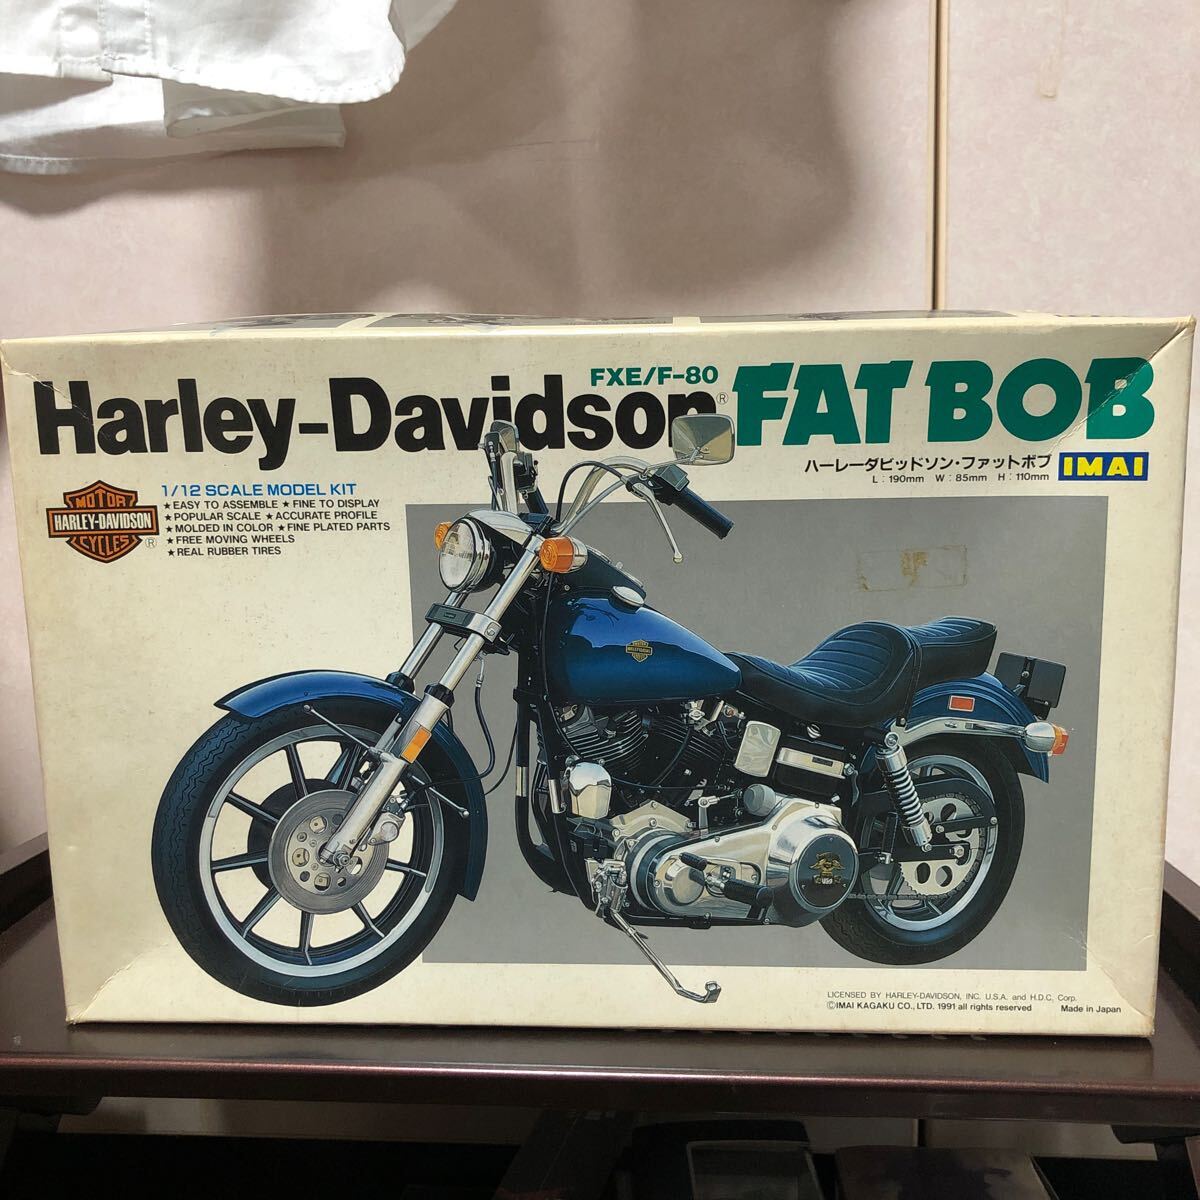 440 не собран 1/12 Harley Davidson FXE/F-80fato* Bob Imai Harley-Davidson FAT BOB пластиковая модель мотоцикл 